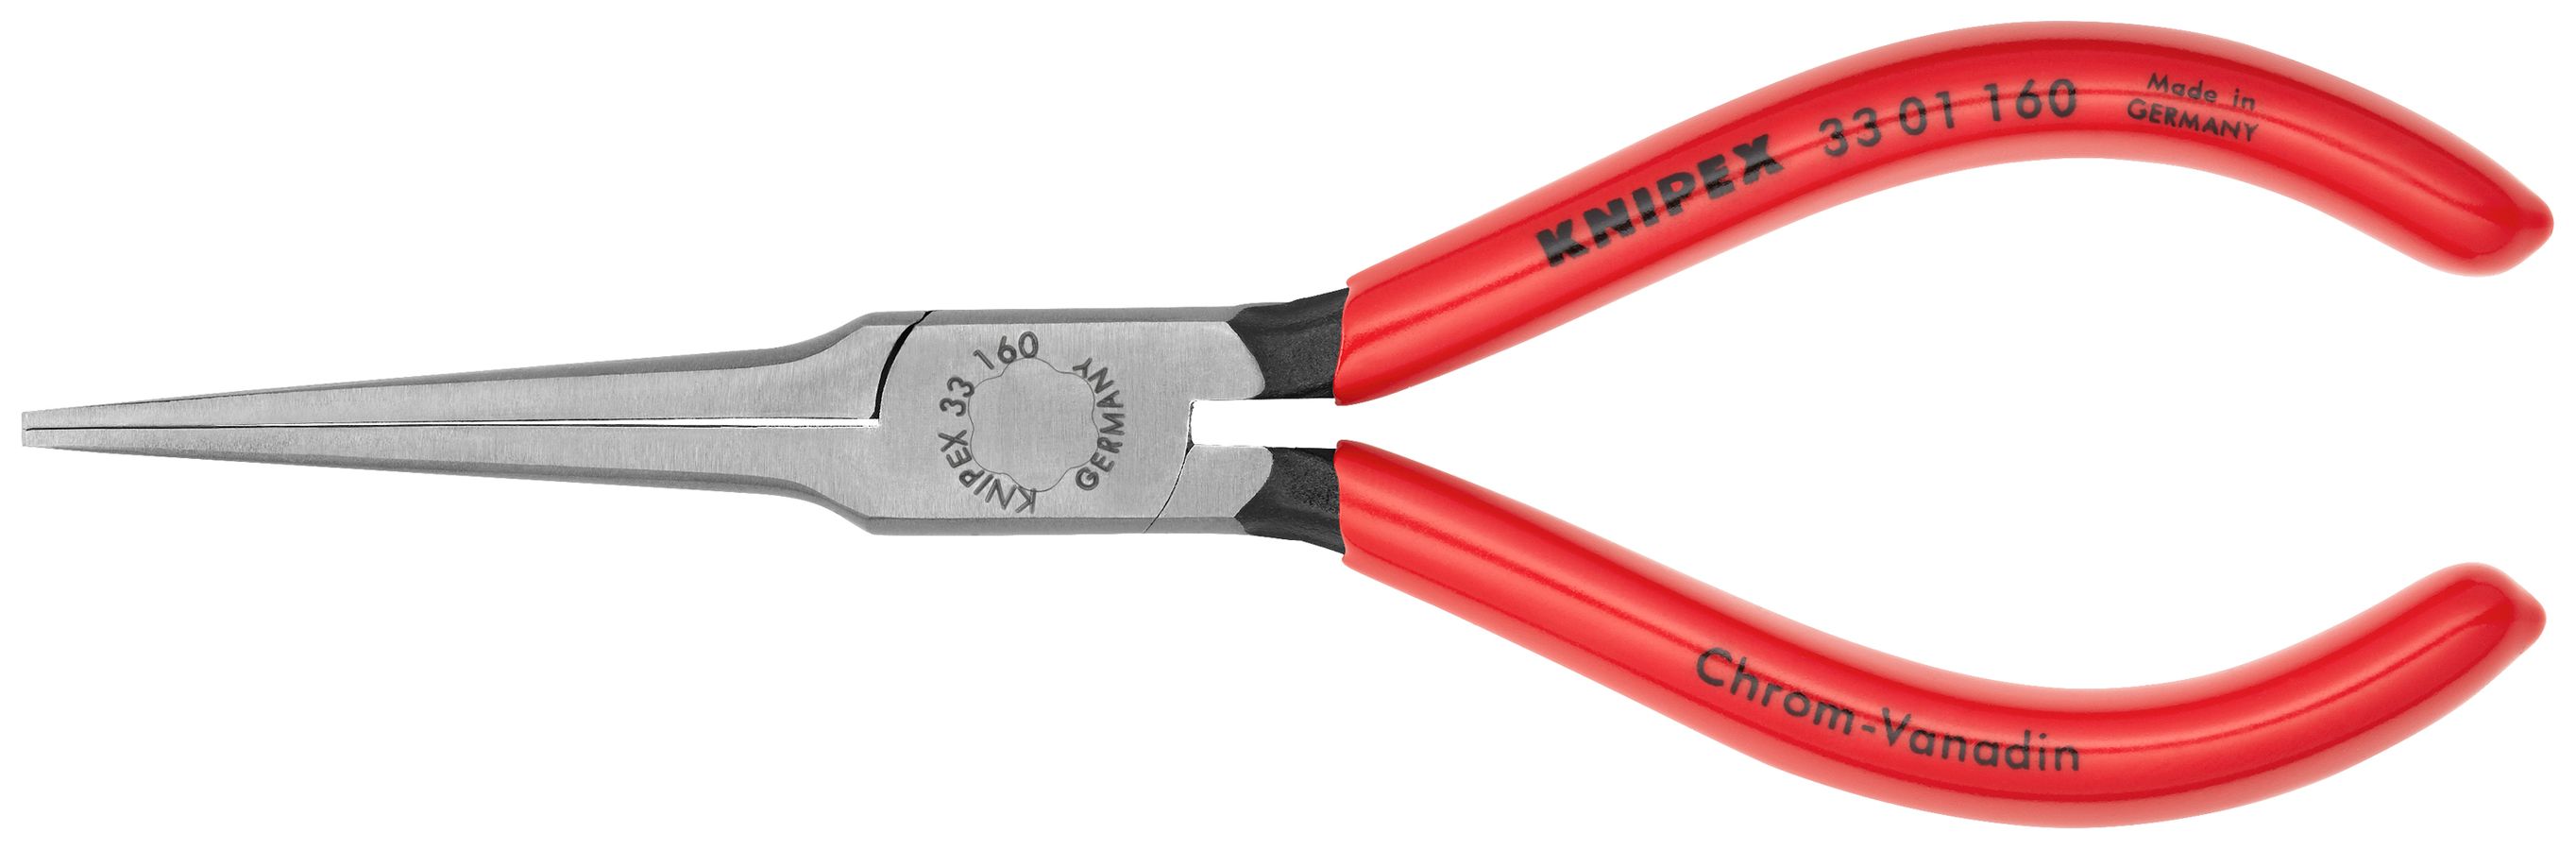 Duckbill Pliers | KNIPEX Tools